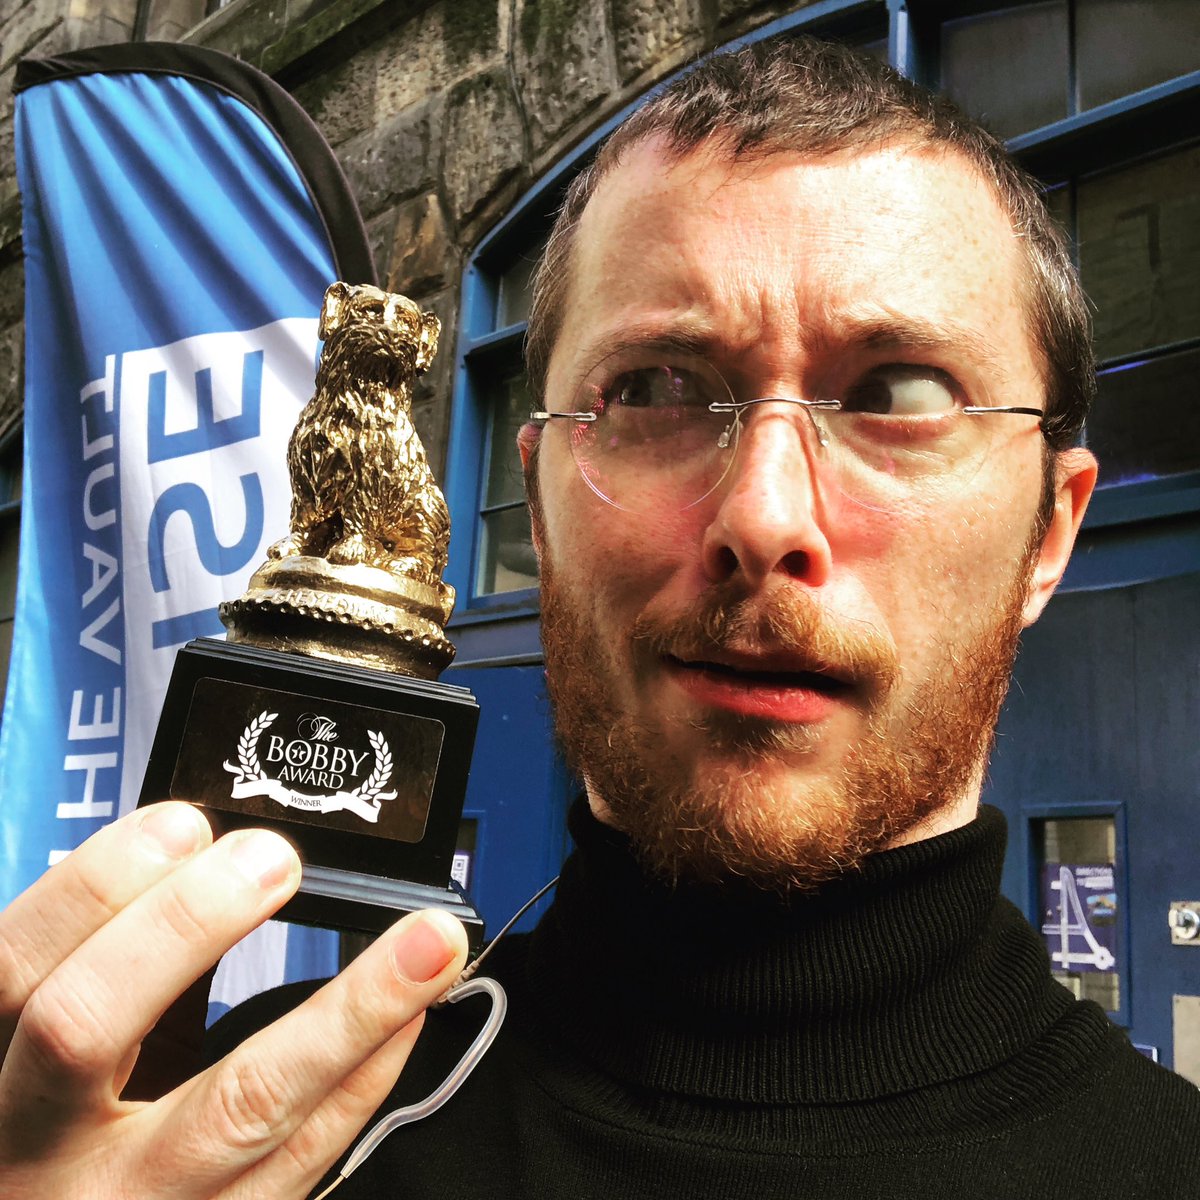 We won a BOBBY AWARD 🏆 Thank you @broadwaybaby 🥹 #edfringe #fillyerboots